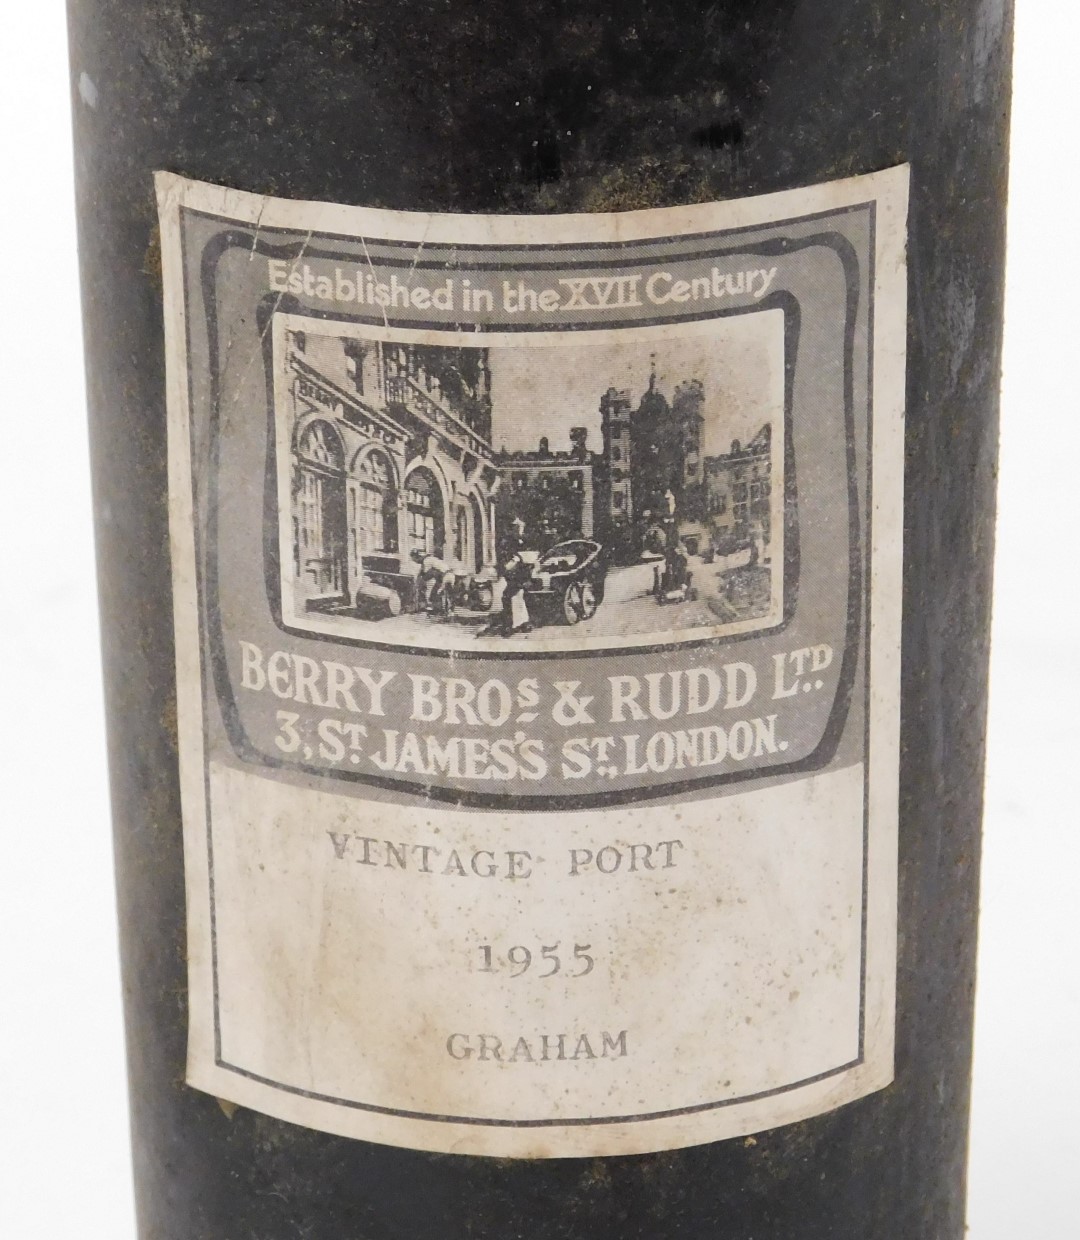 A bottle of vintage port, for Berry Bros & Rudd Ltd, named as Graham 1955. - Image 2 of 3